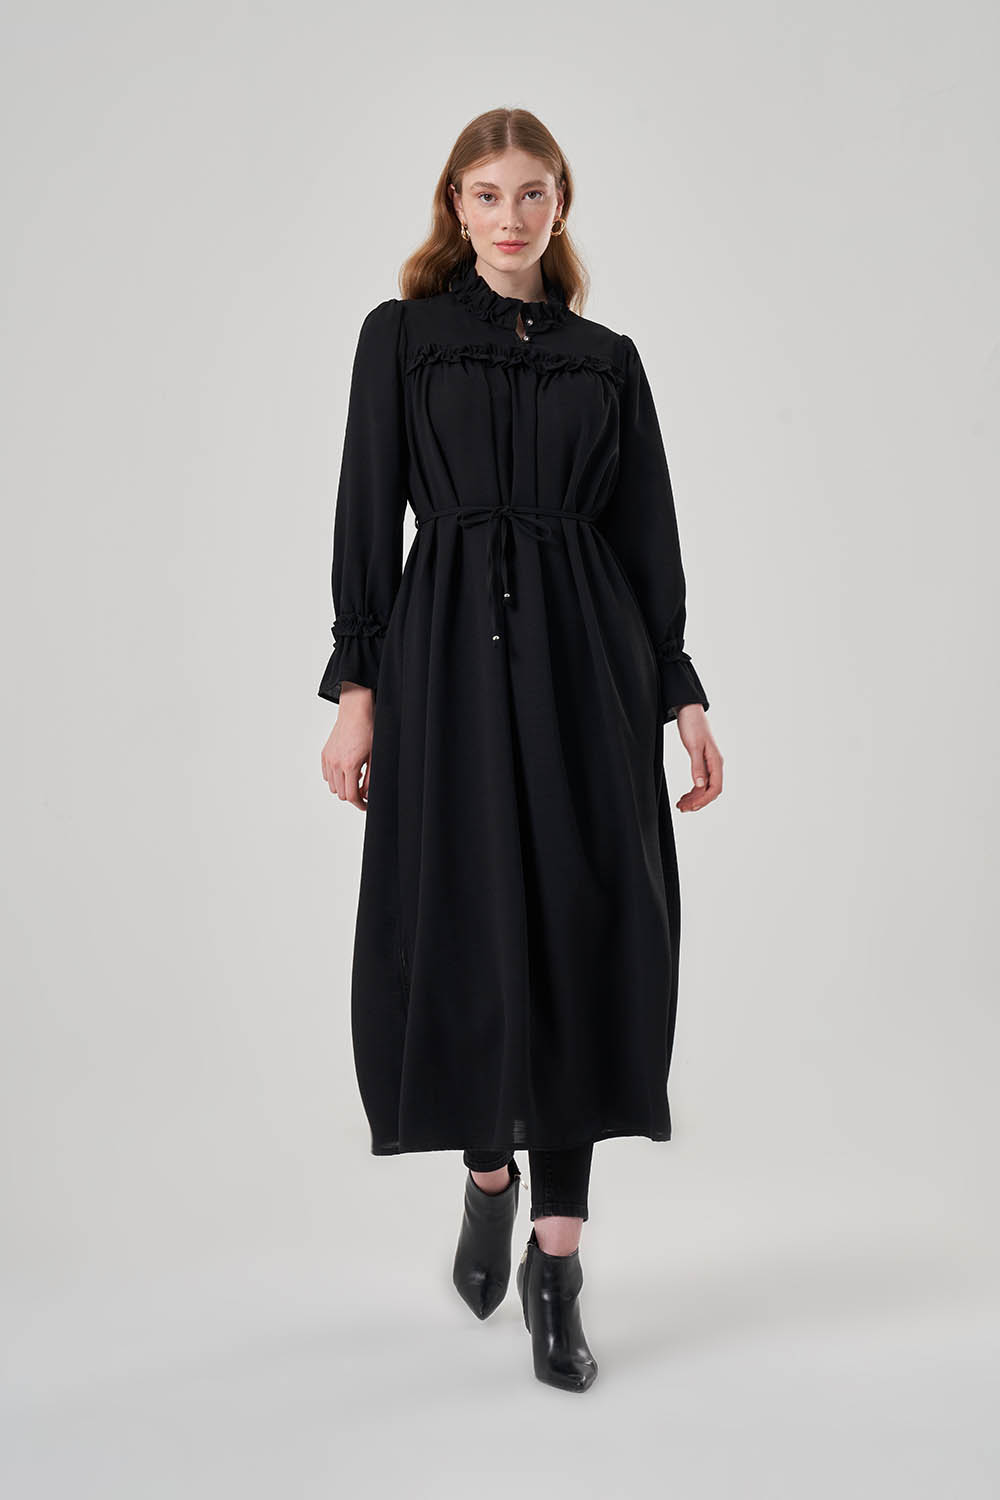 Ruffle Detailed Black Long Dress